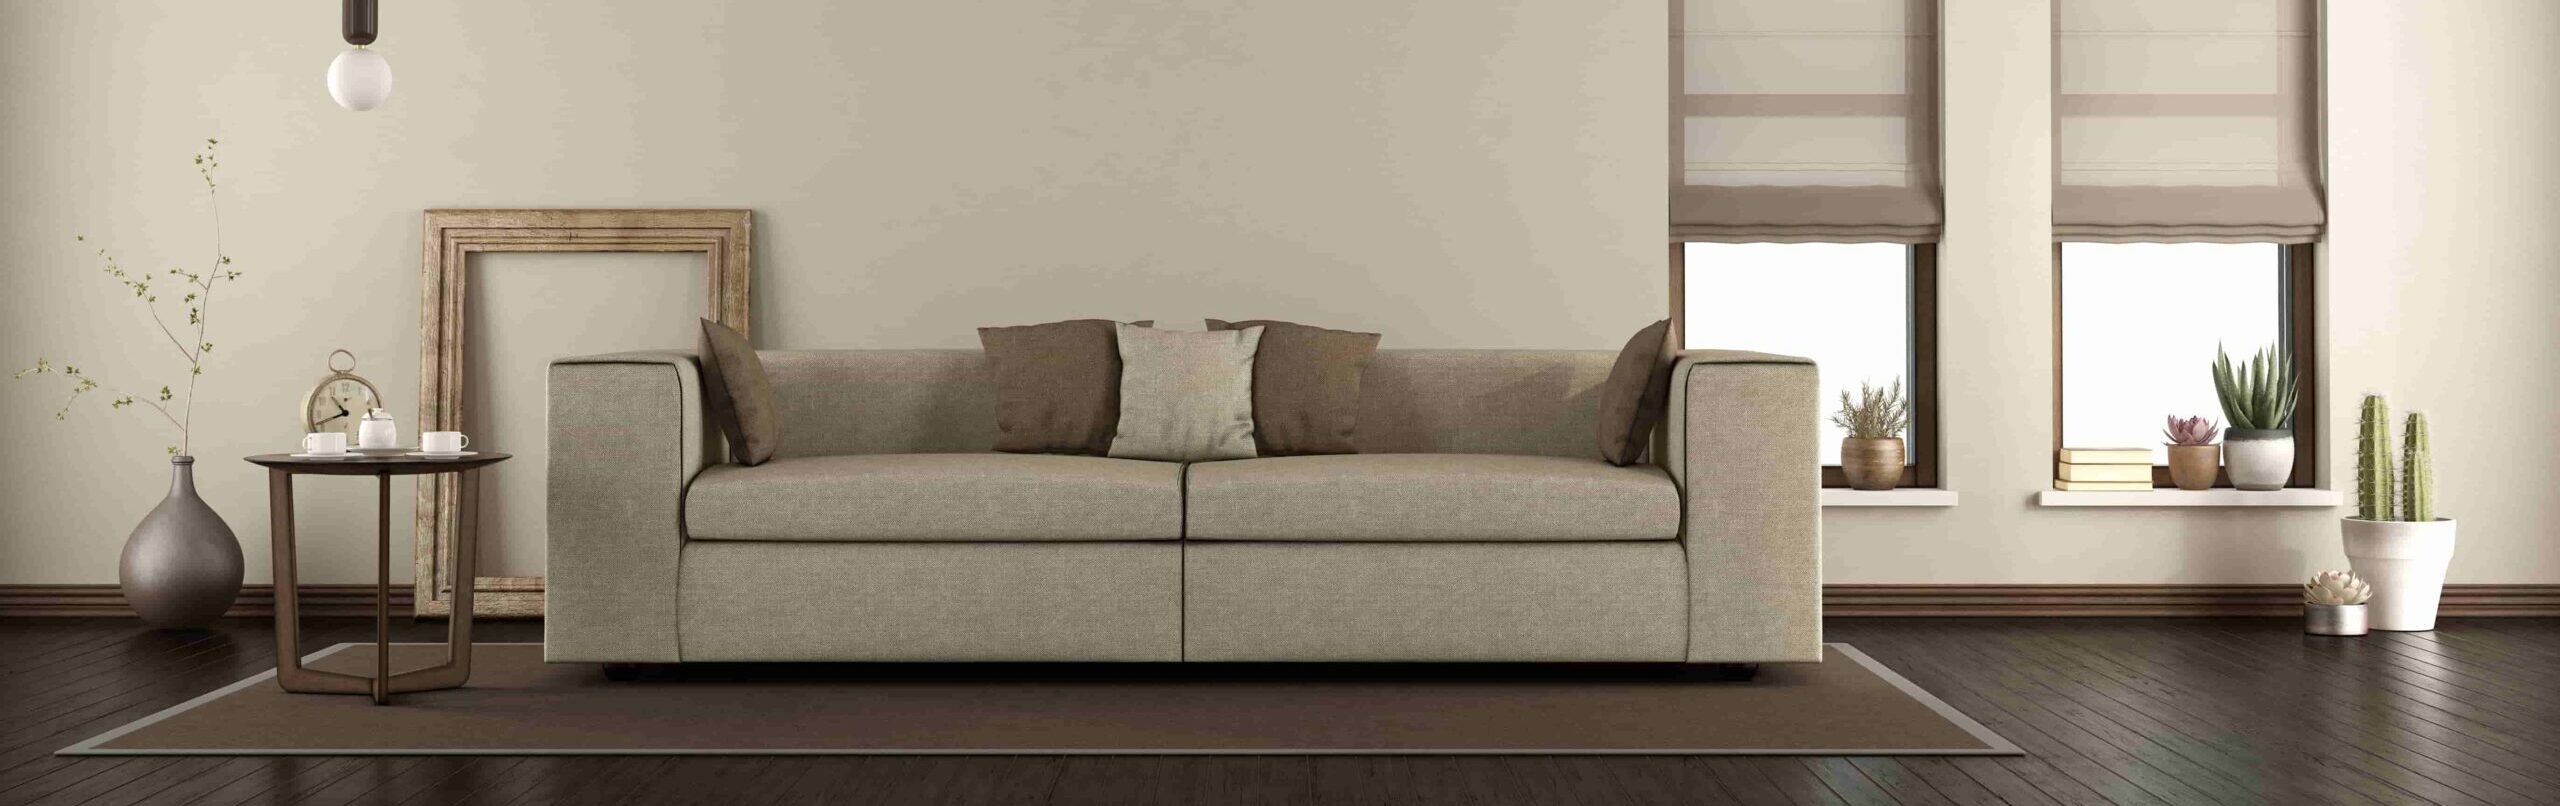 elegant living room with sofa on carpet scaled e1627543817277